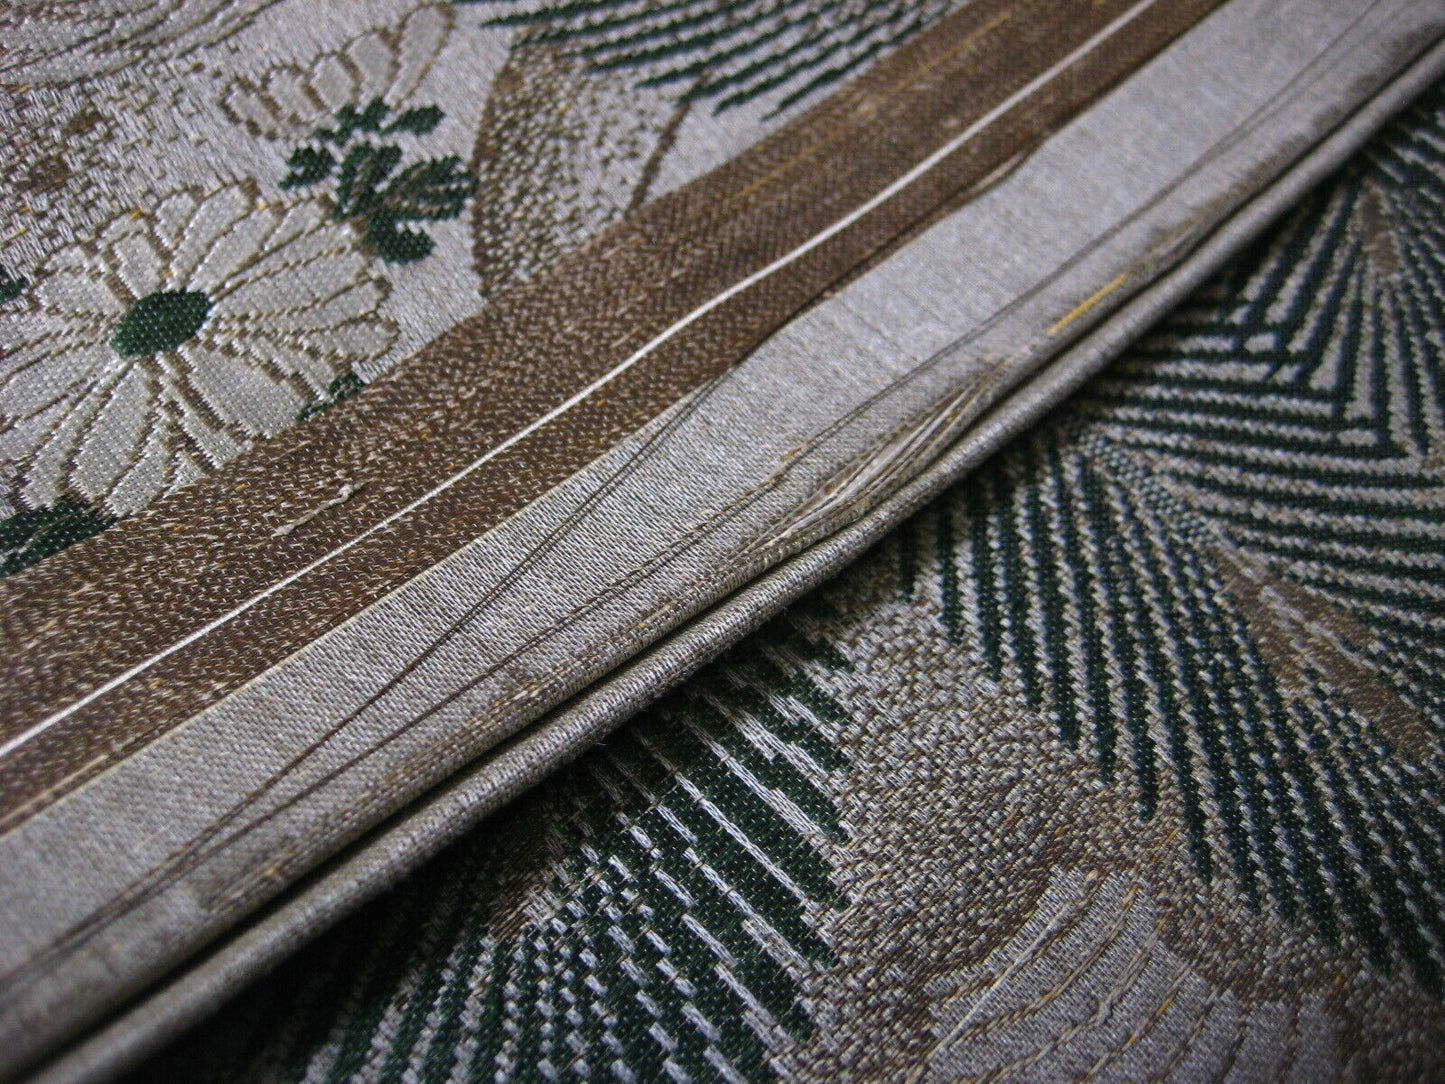 Japanese Silk Nagoya Obi Sash For Kimono Phoenix Plum Blossum & Pines 11Ft